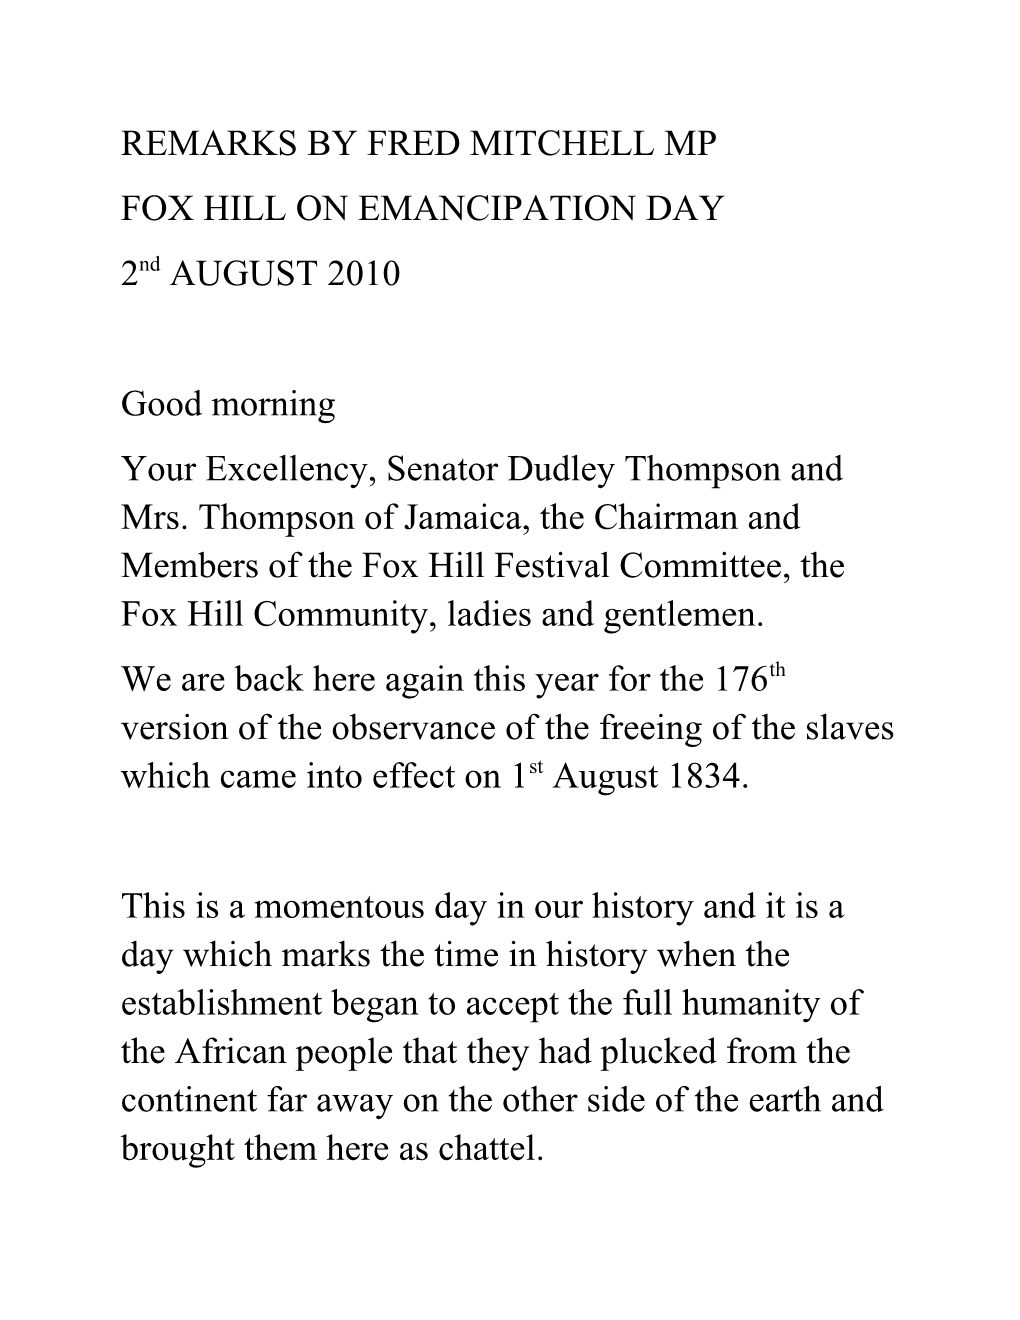 Fox Hill on Emancipation Day